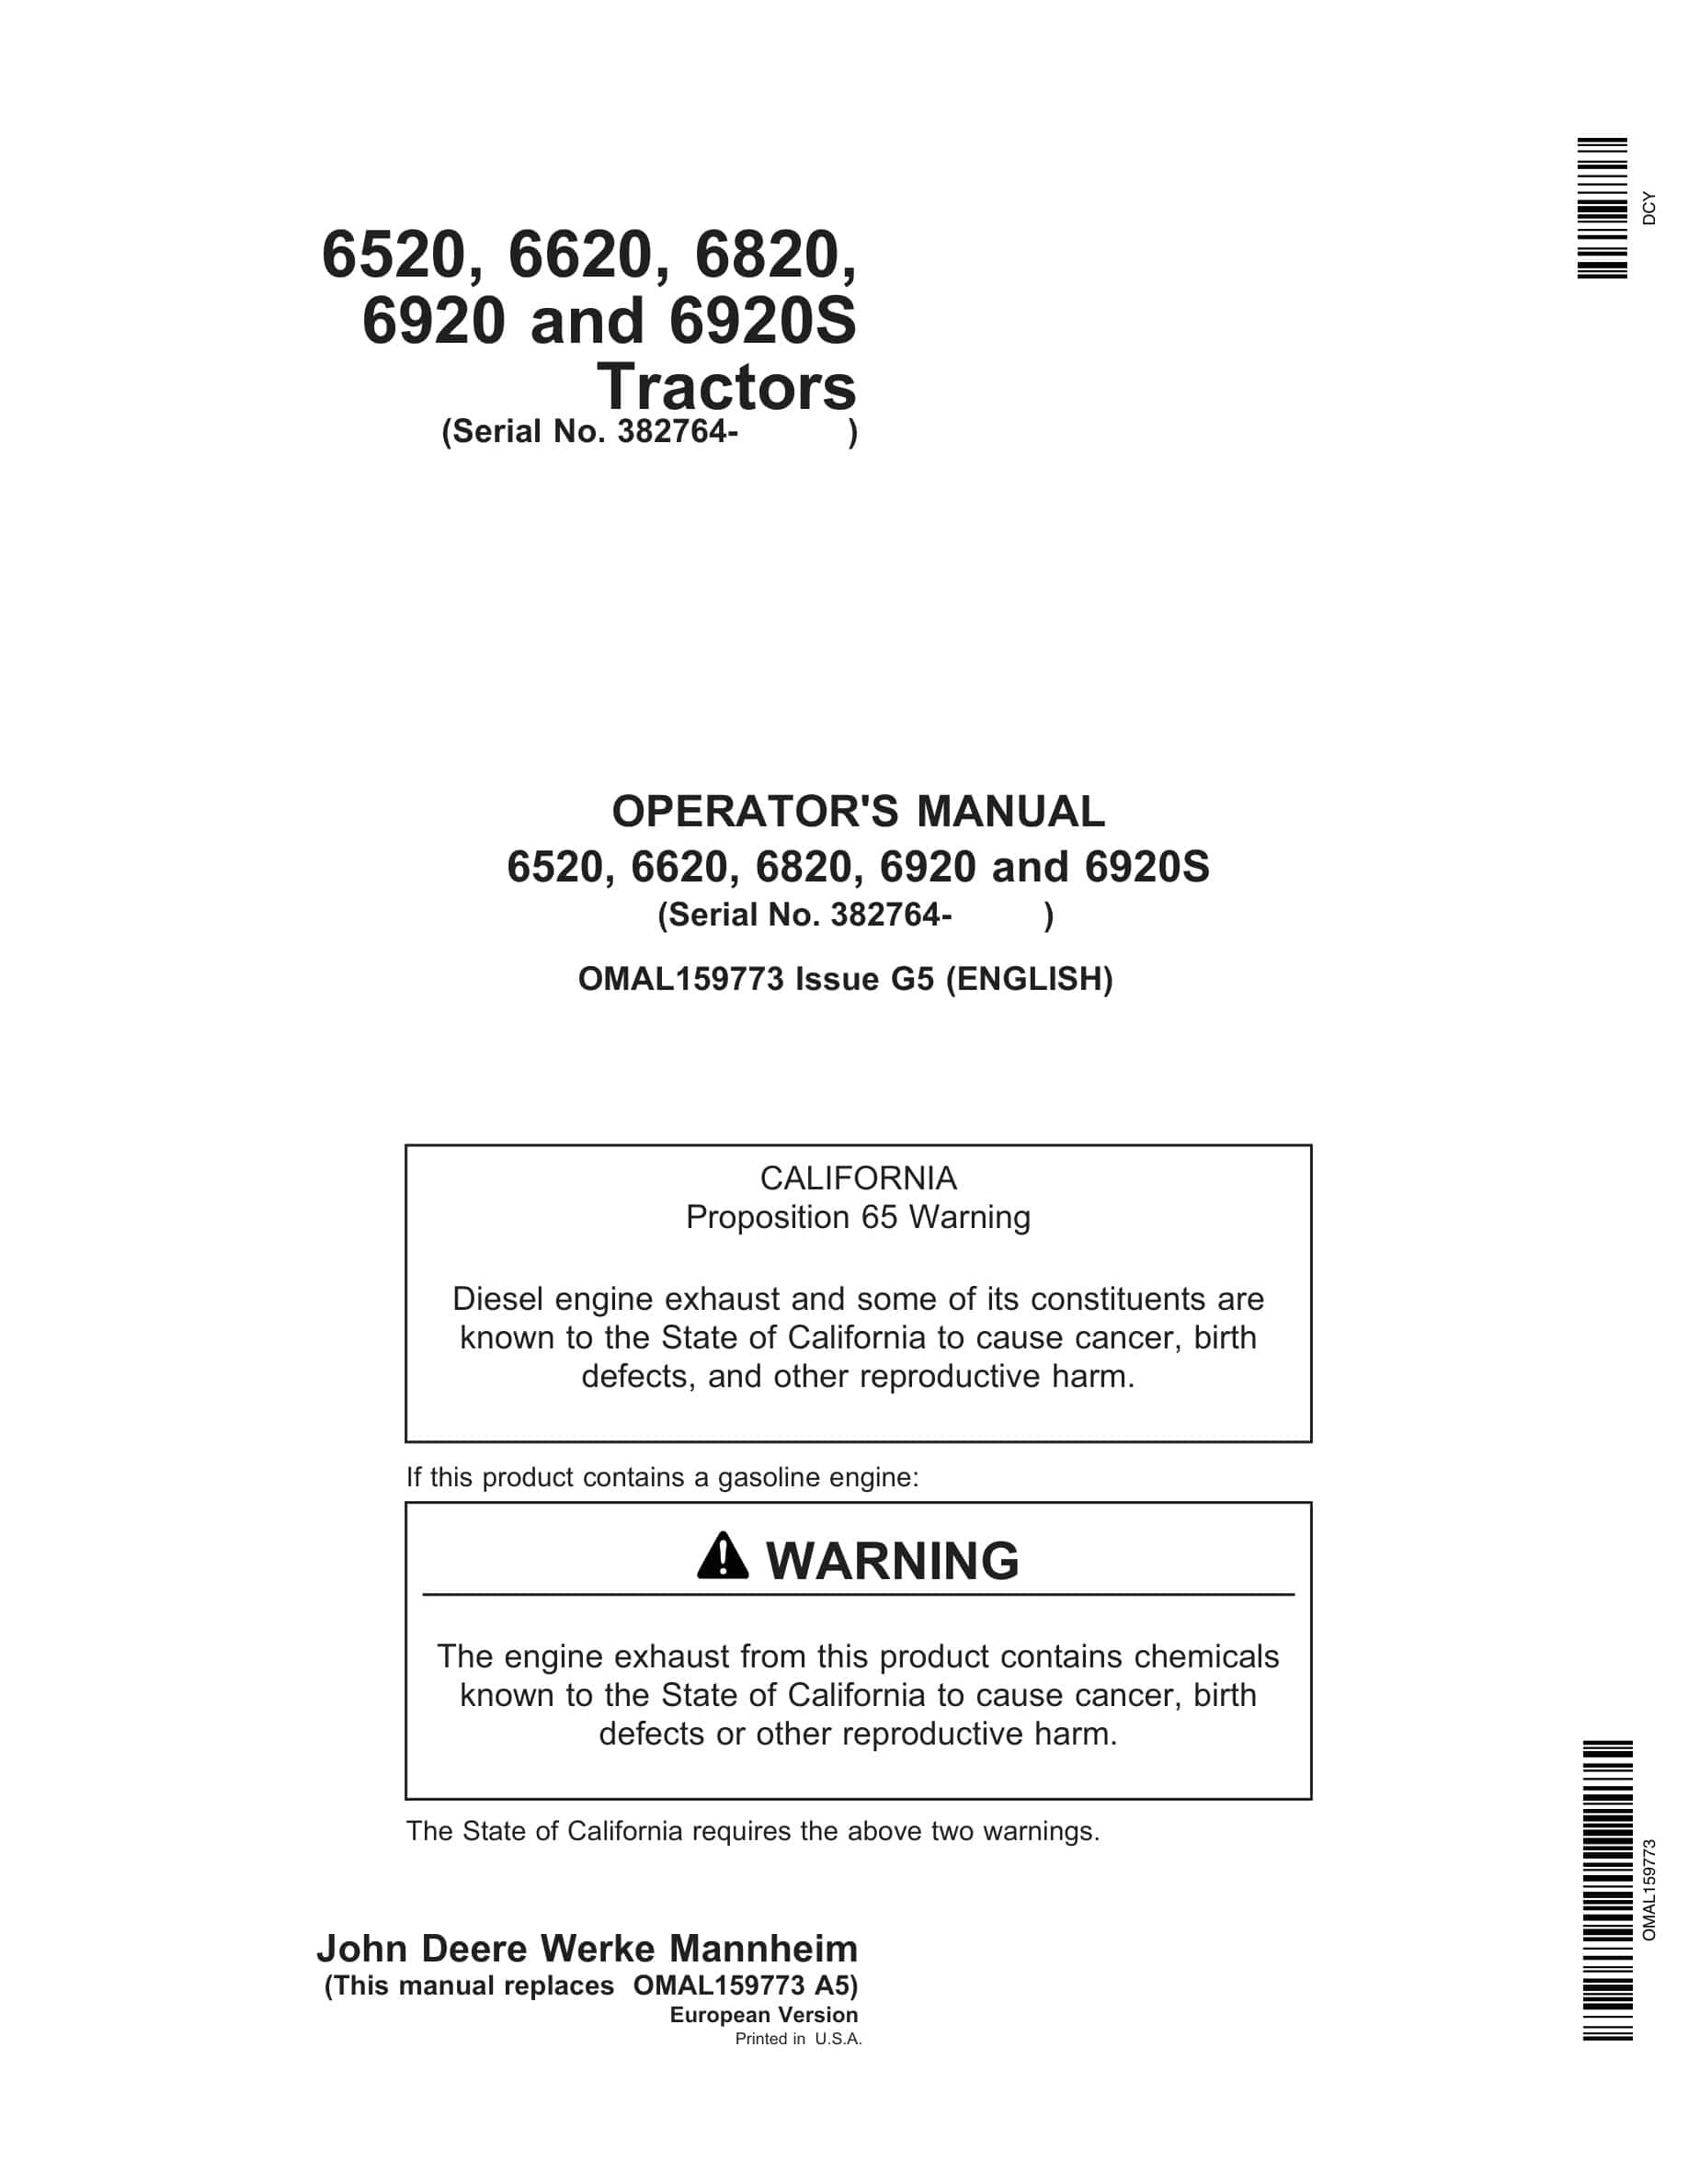 John Deere 6520, 6620, 6820, 6920 And 6920s Tractors Operator Manuals OMAL159773-1